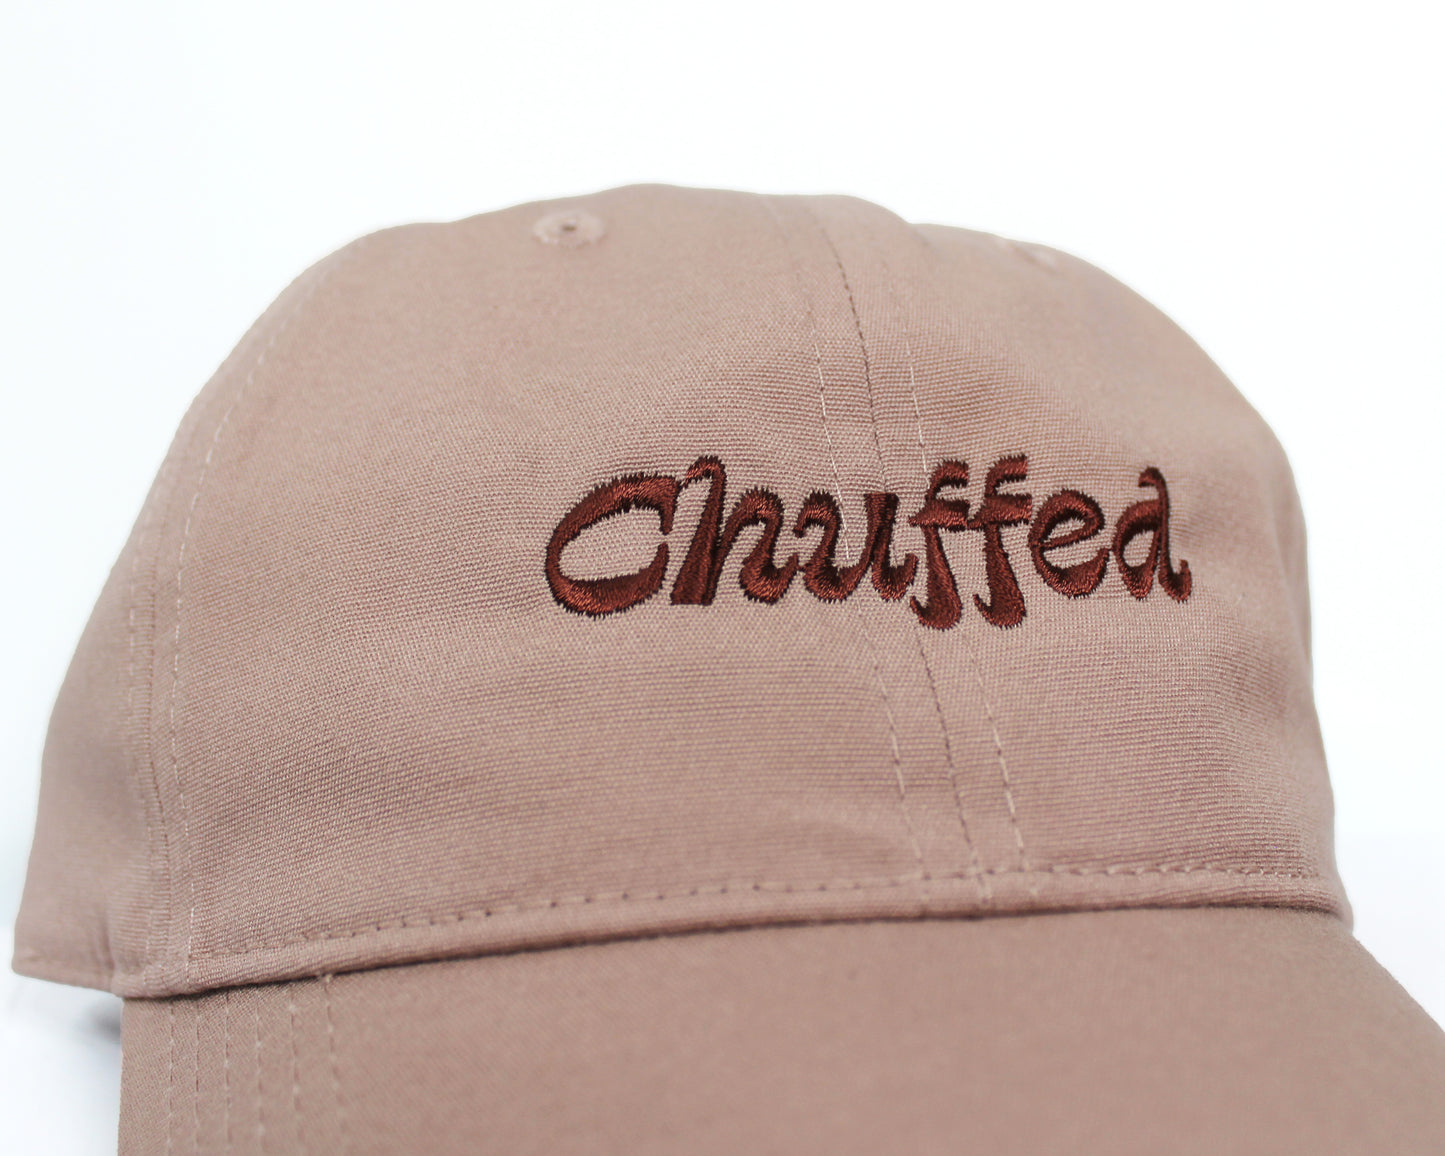 Chuffed CAP - 2 Colours